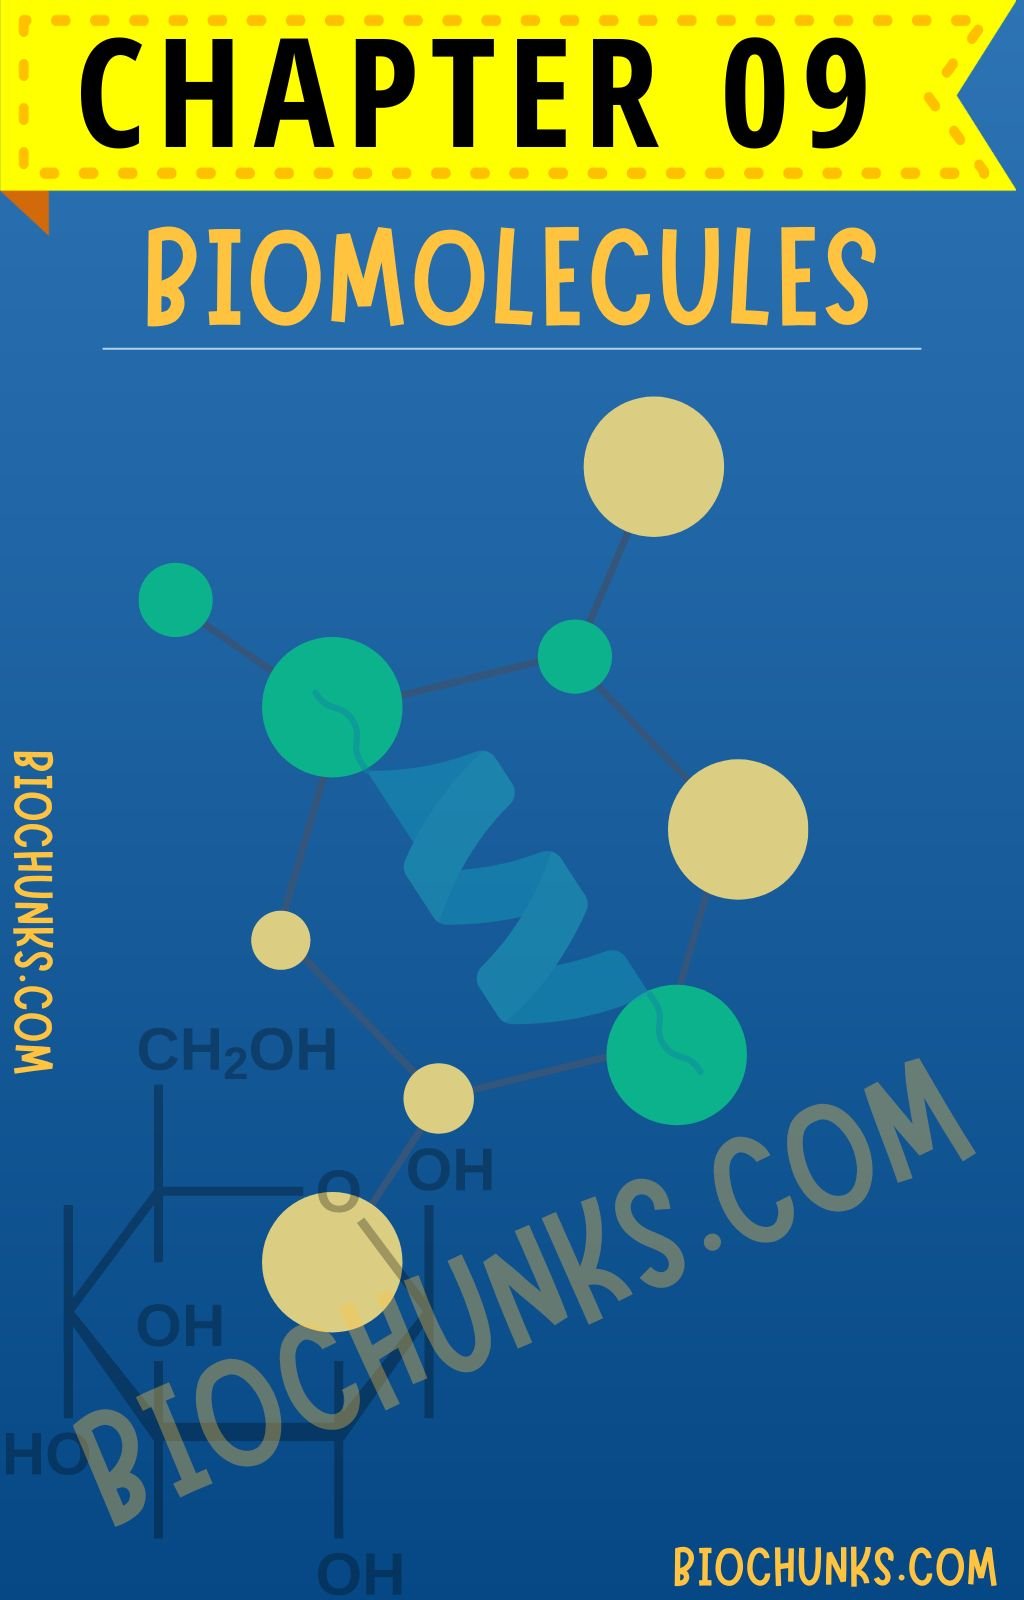 Biomolecules Chapter 09 Class 11th biochunks.com